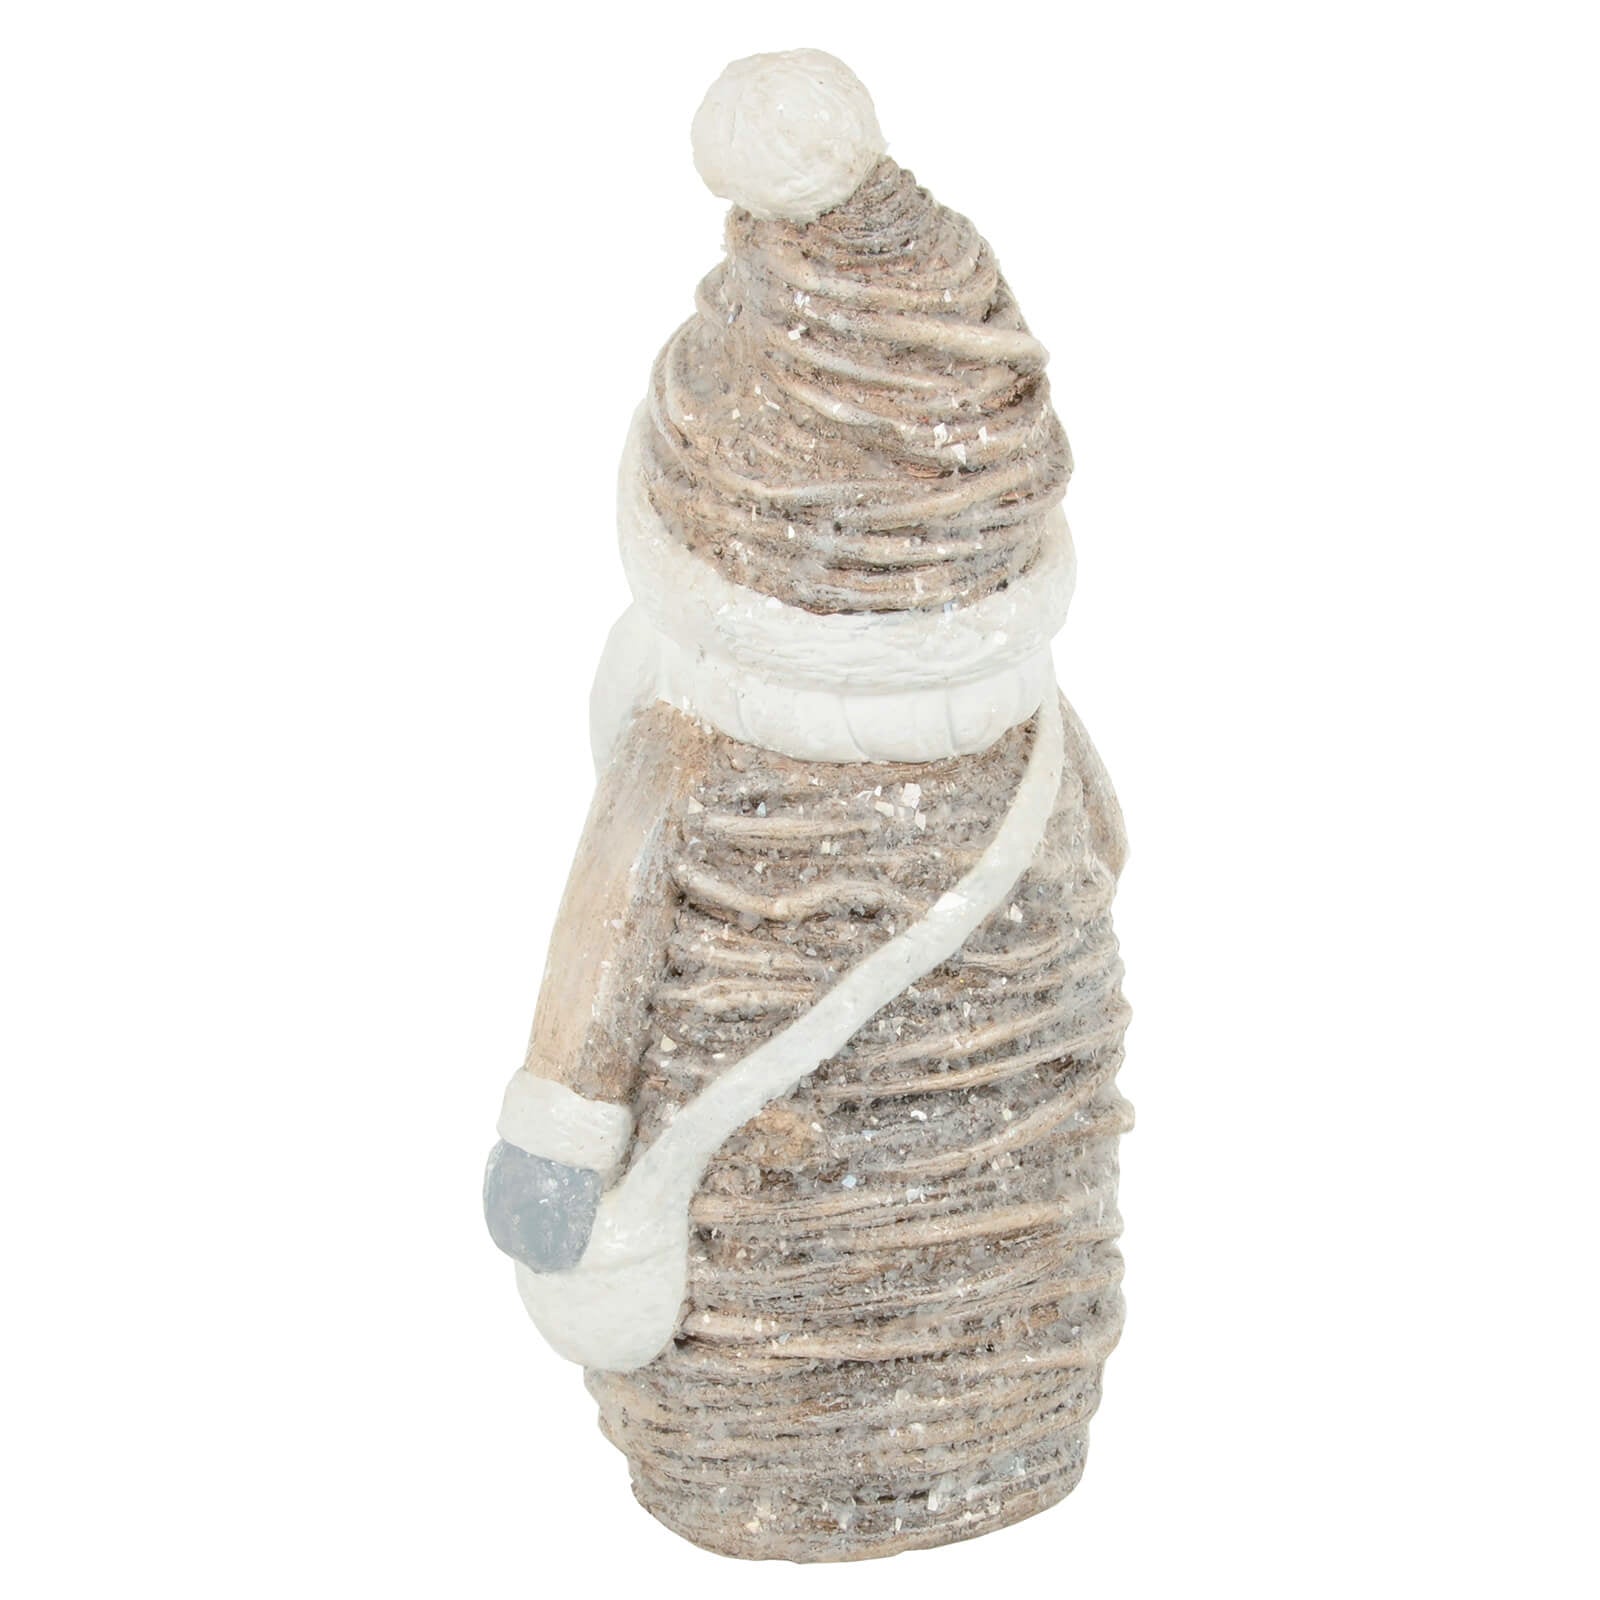 Mr Crimbo Christmas Figure Decoration Pine Branch Ceramic 45cm - MrCrimbo.co.uk -XS7147 - Snowman -